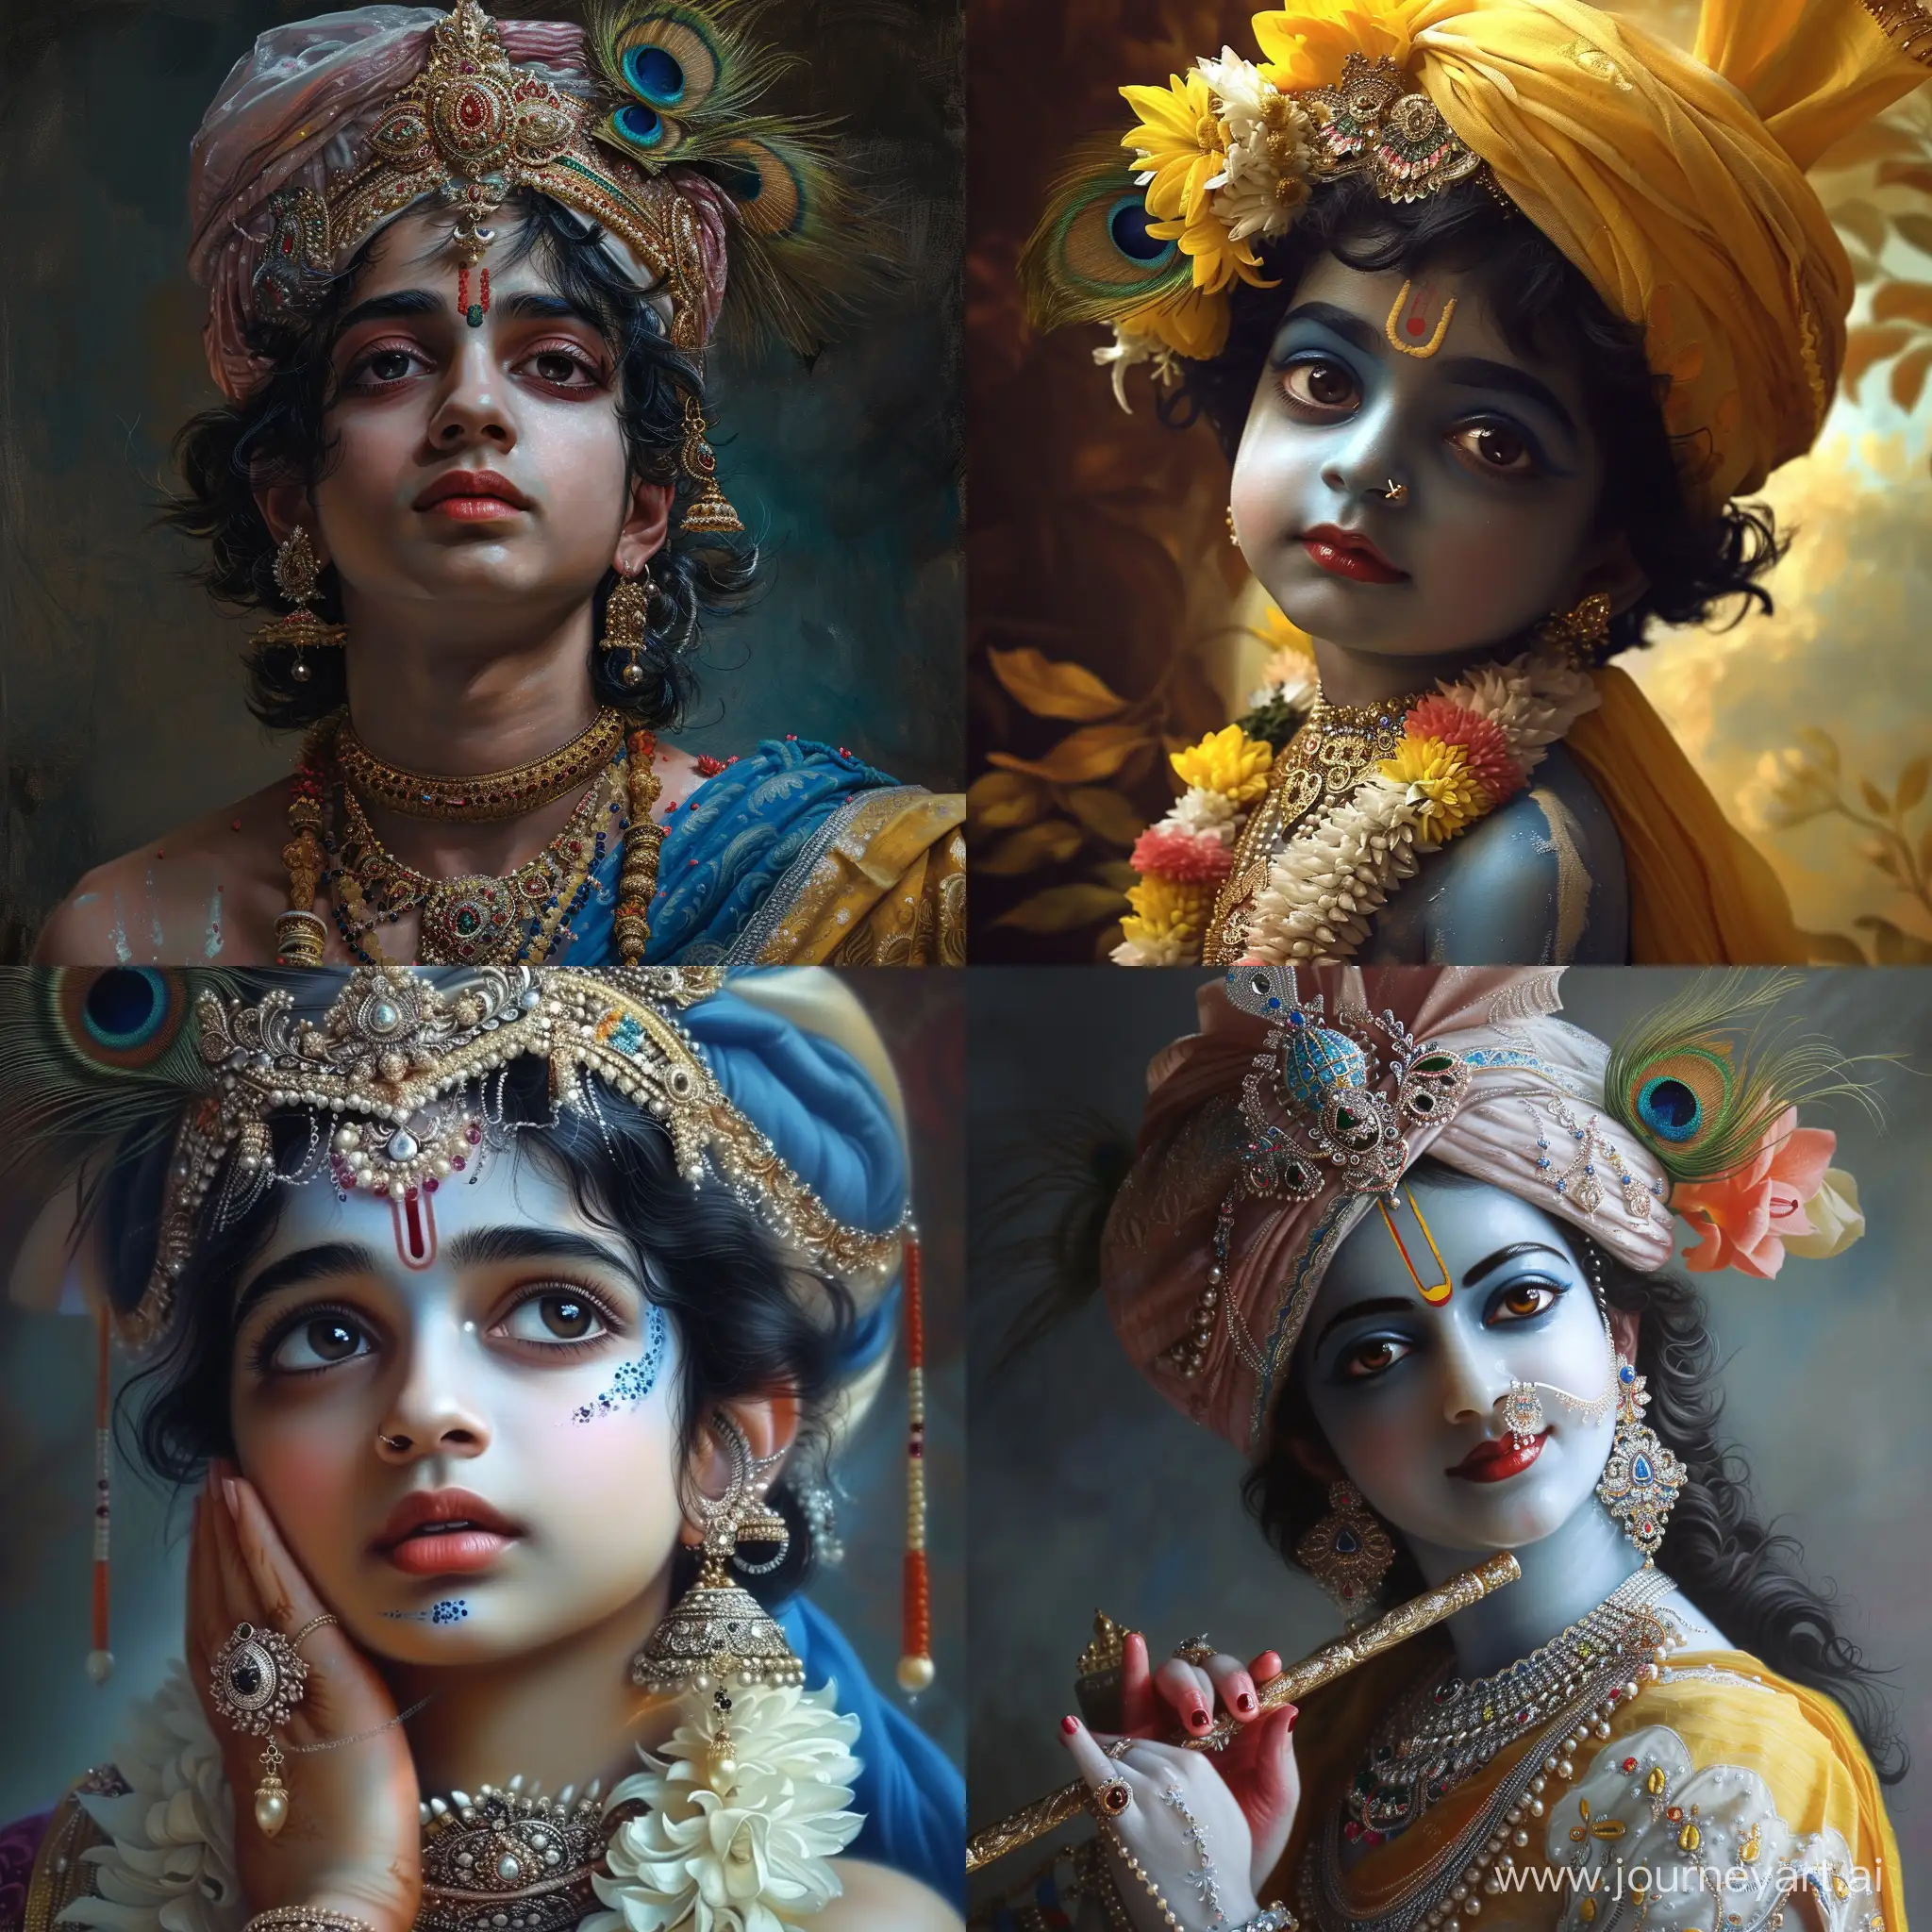 Realistic-Depiction-of-Hindu-God-Krishna-in-Vibrant-11-Aspect-Ratio